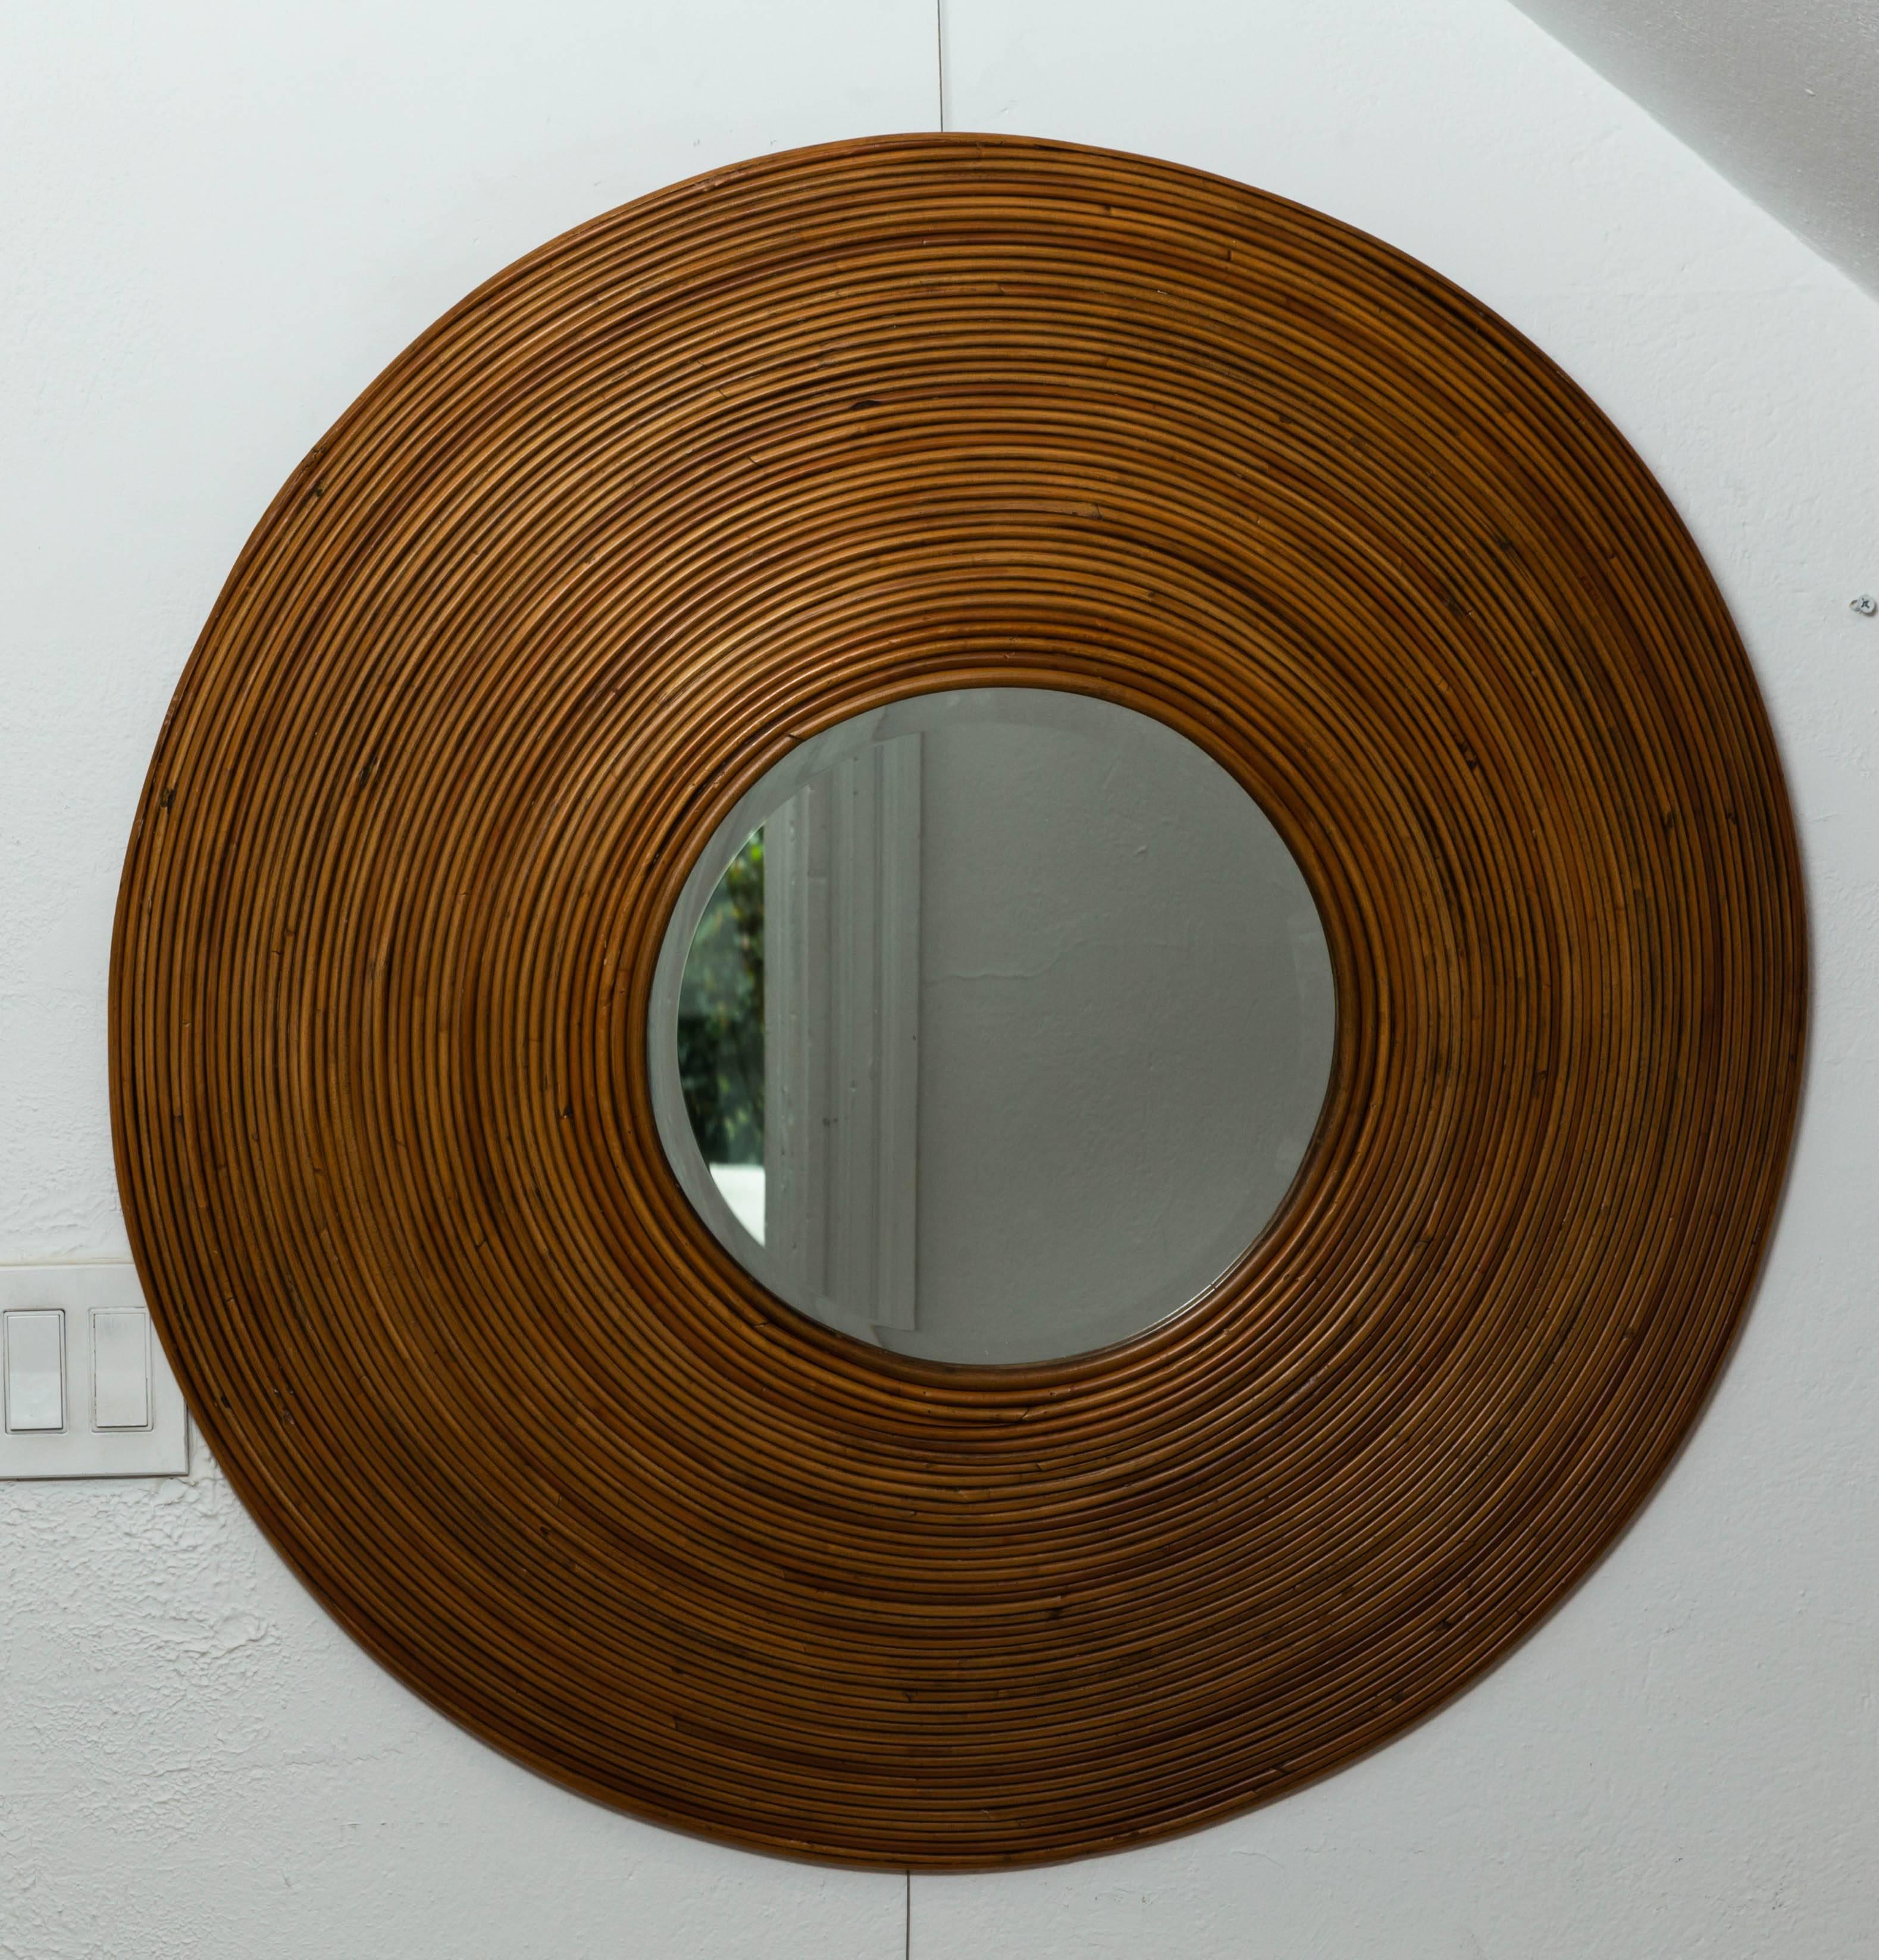 Large circular beveled mirror with bamboo reed surround (beveled mirror 14